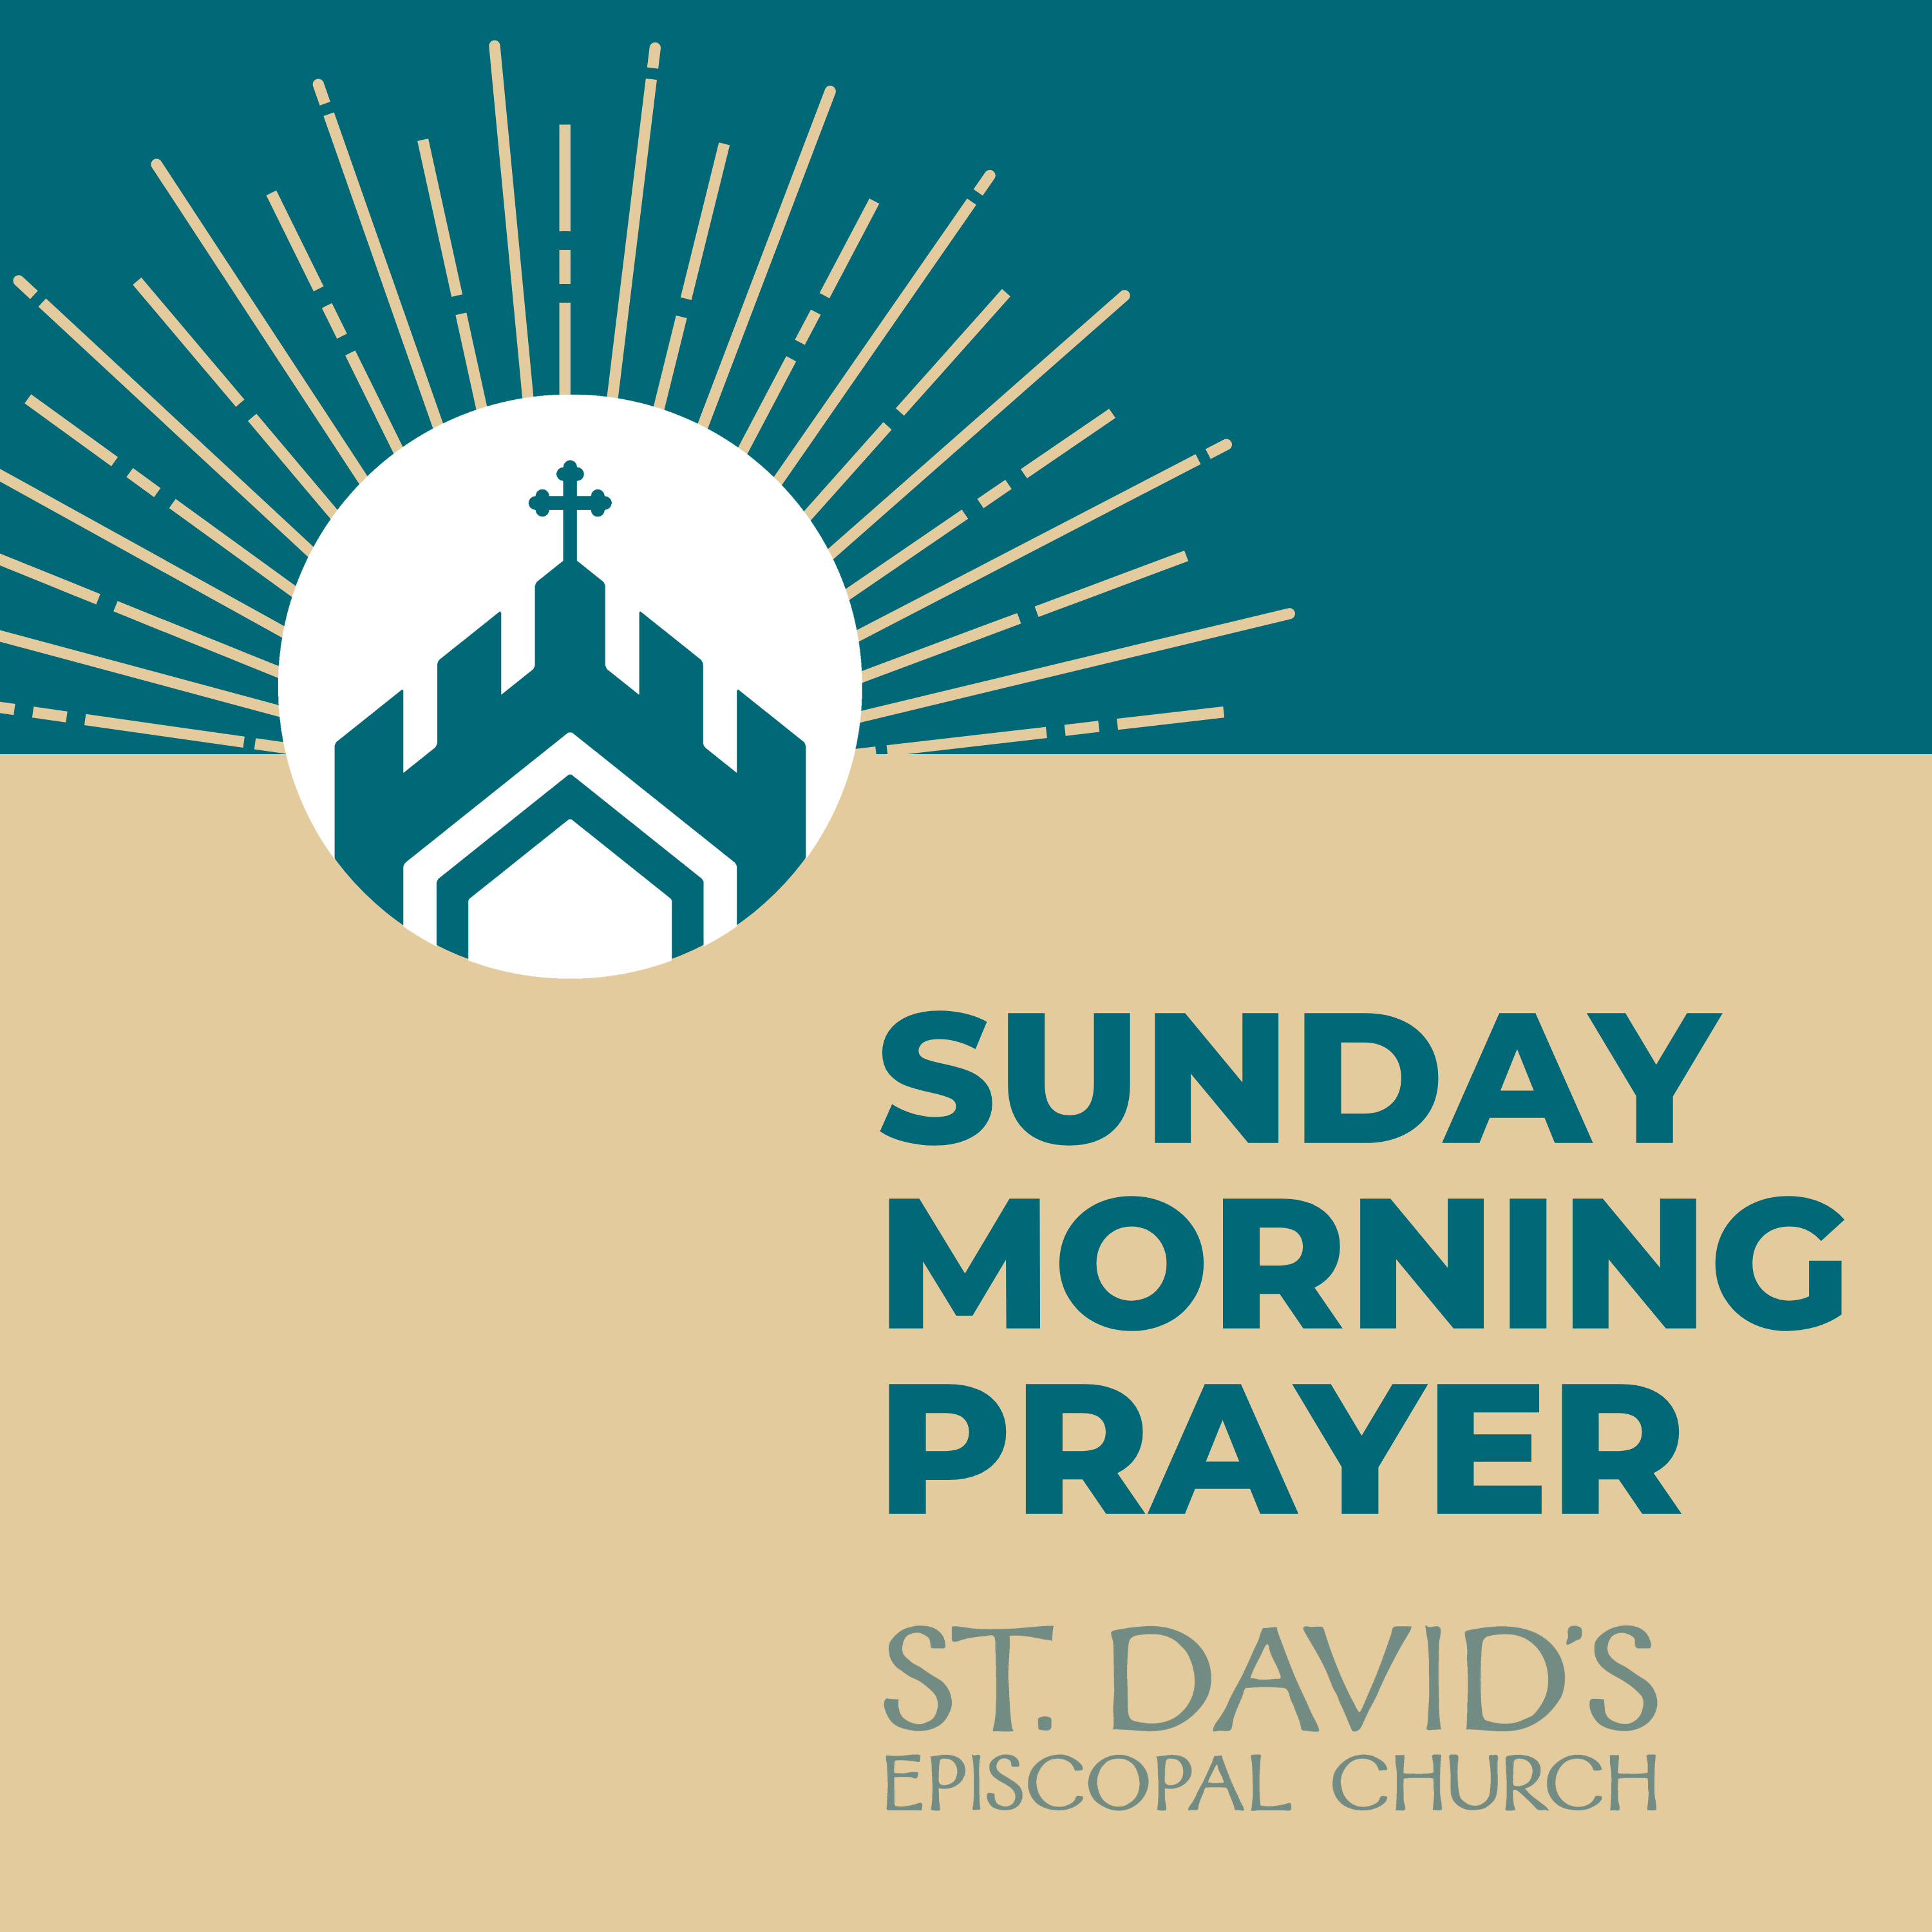 Sunday Morning Prayer: Rite Two, Year 2, 10th Sunday after Pentecost